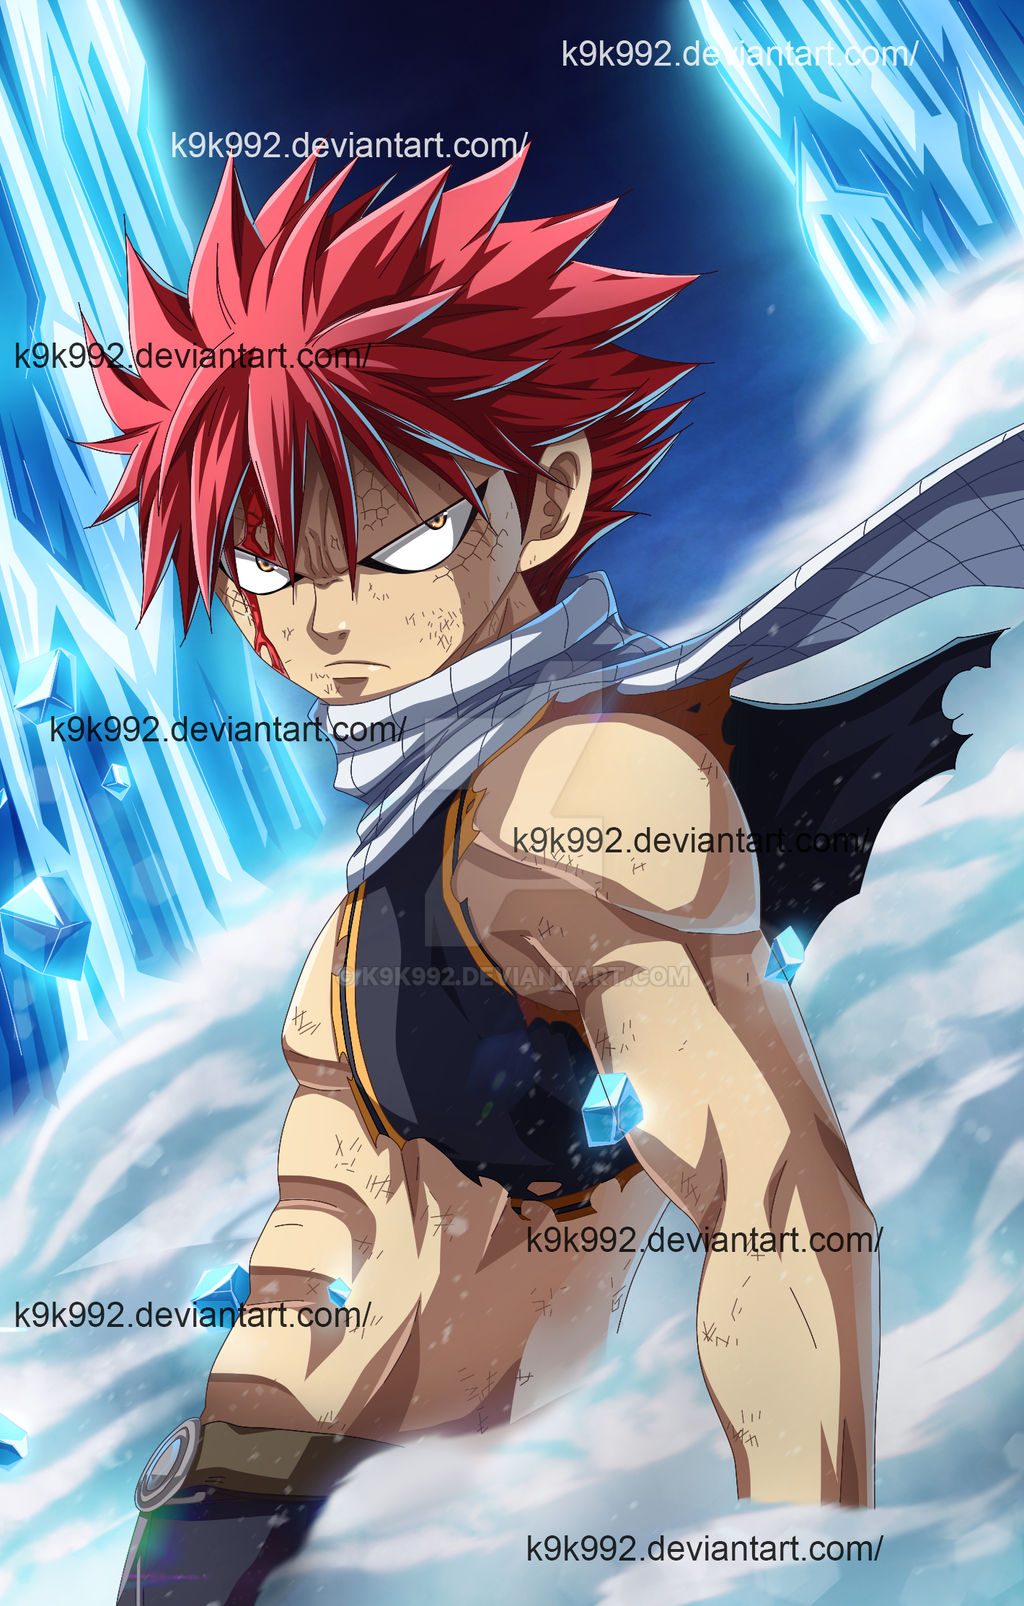 Natsu Dragon Force - Fairy Tail 98 by k9k992 on DeviantArt